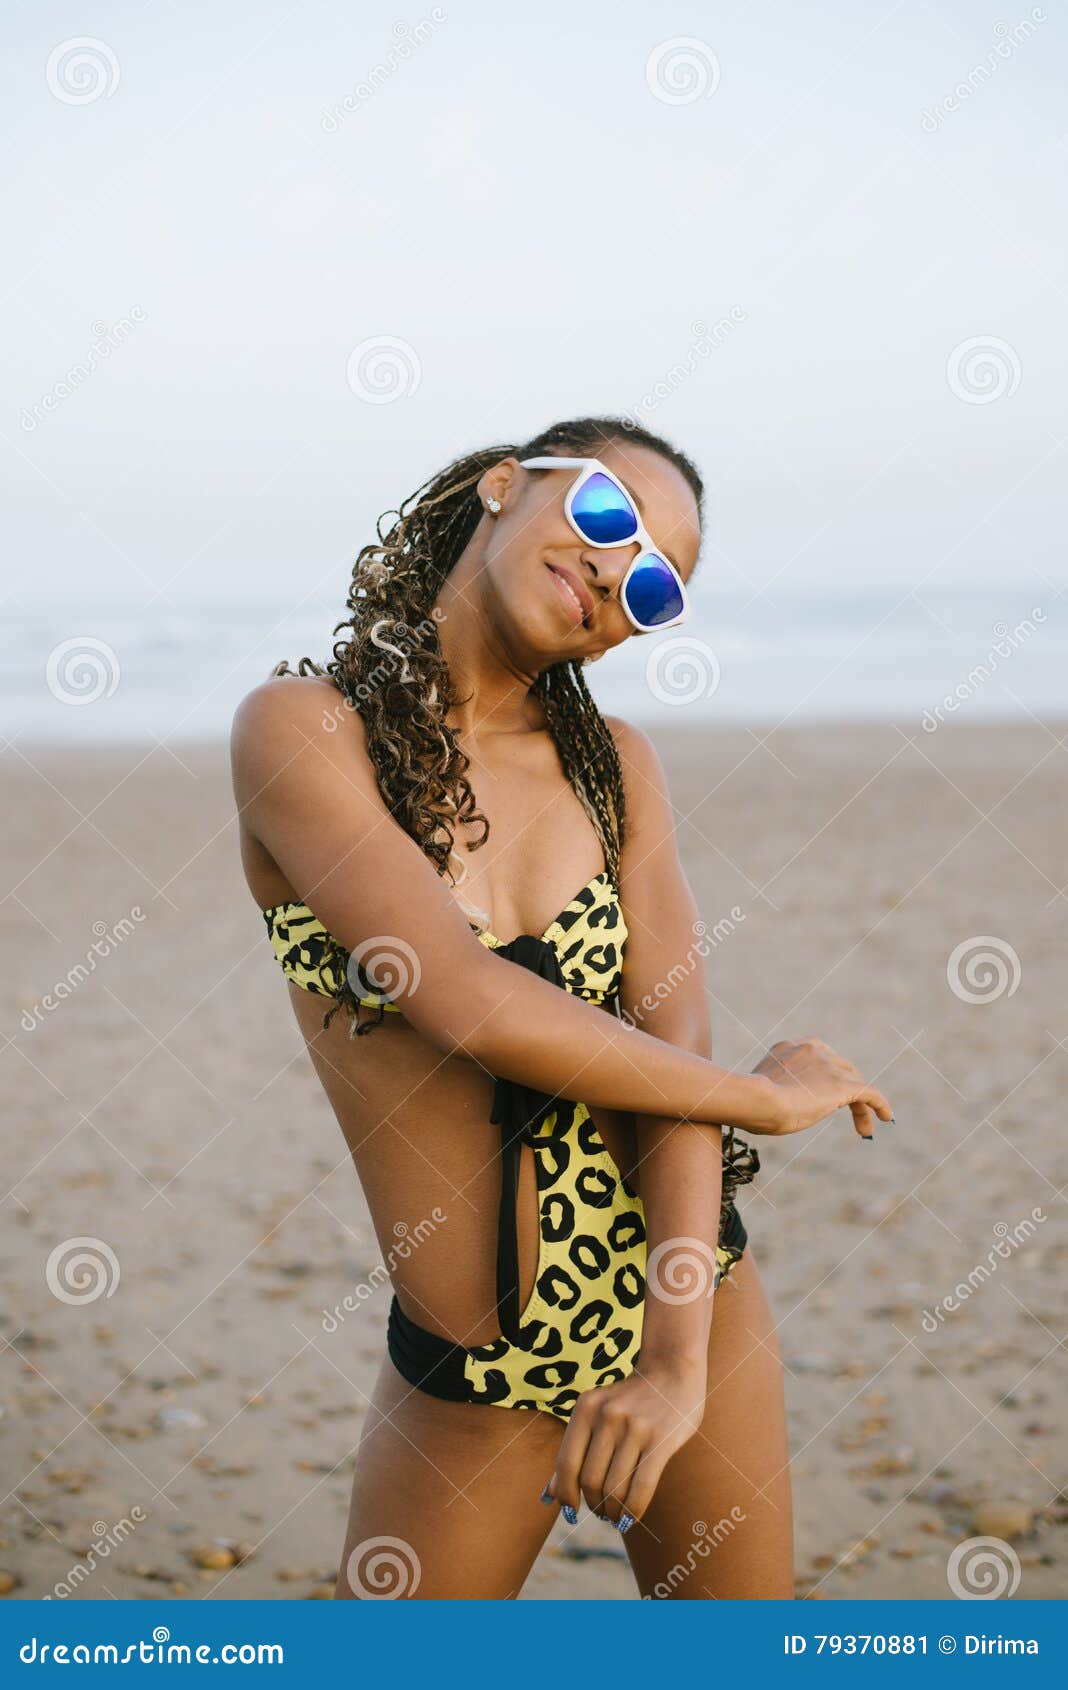 https://thumbs.dreamstime.com/z/graceful-brazilian-woman-fashion-bikini-beach-stylish-dancing-enjoying-vacation-black-female-model-dreadlocks-79370881.jpg